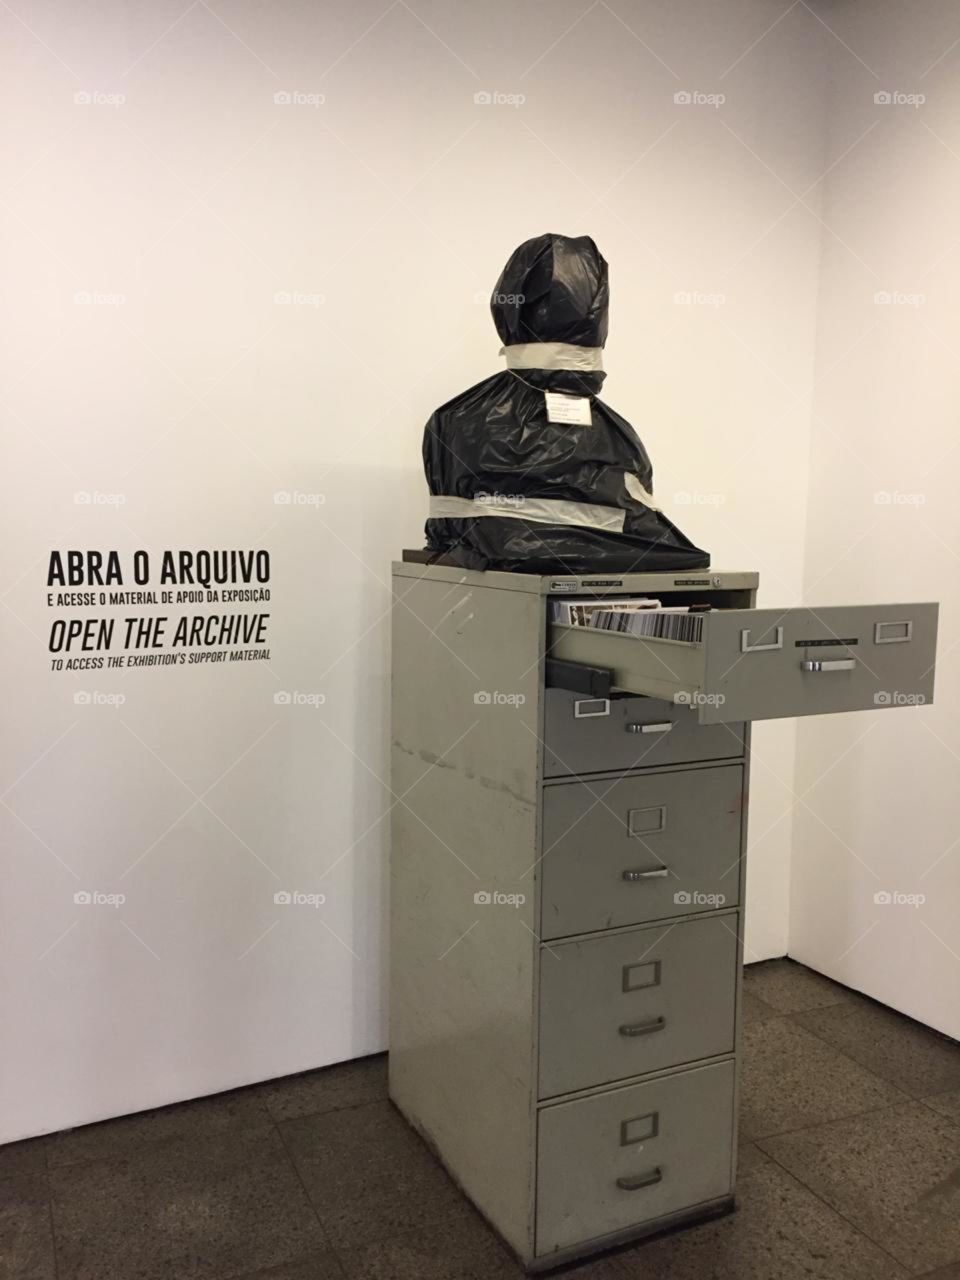 Open the archive - São Paulo/BRA 2019